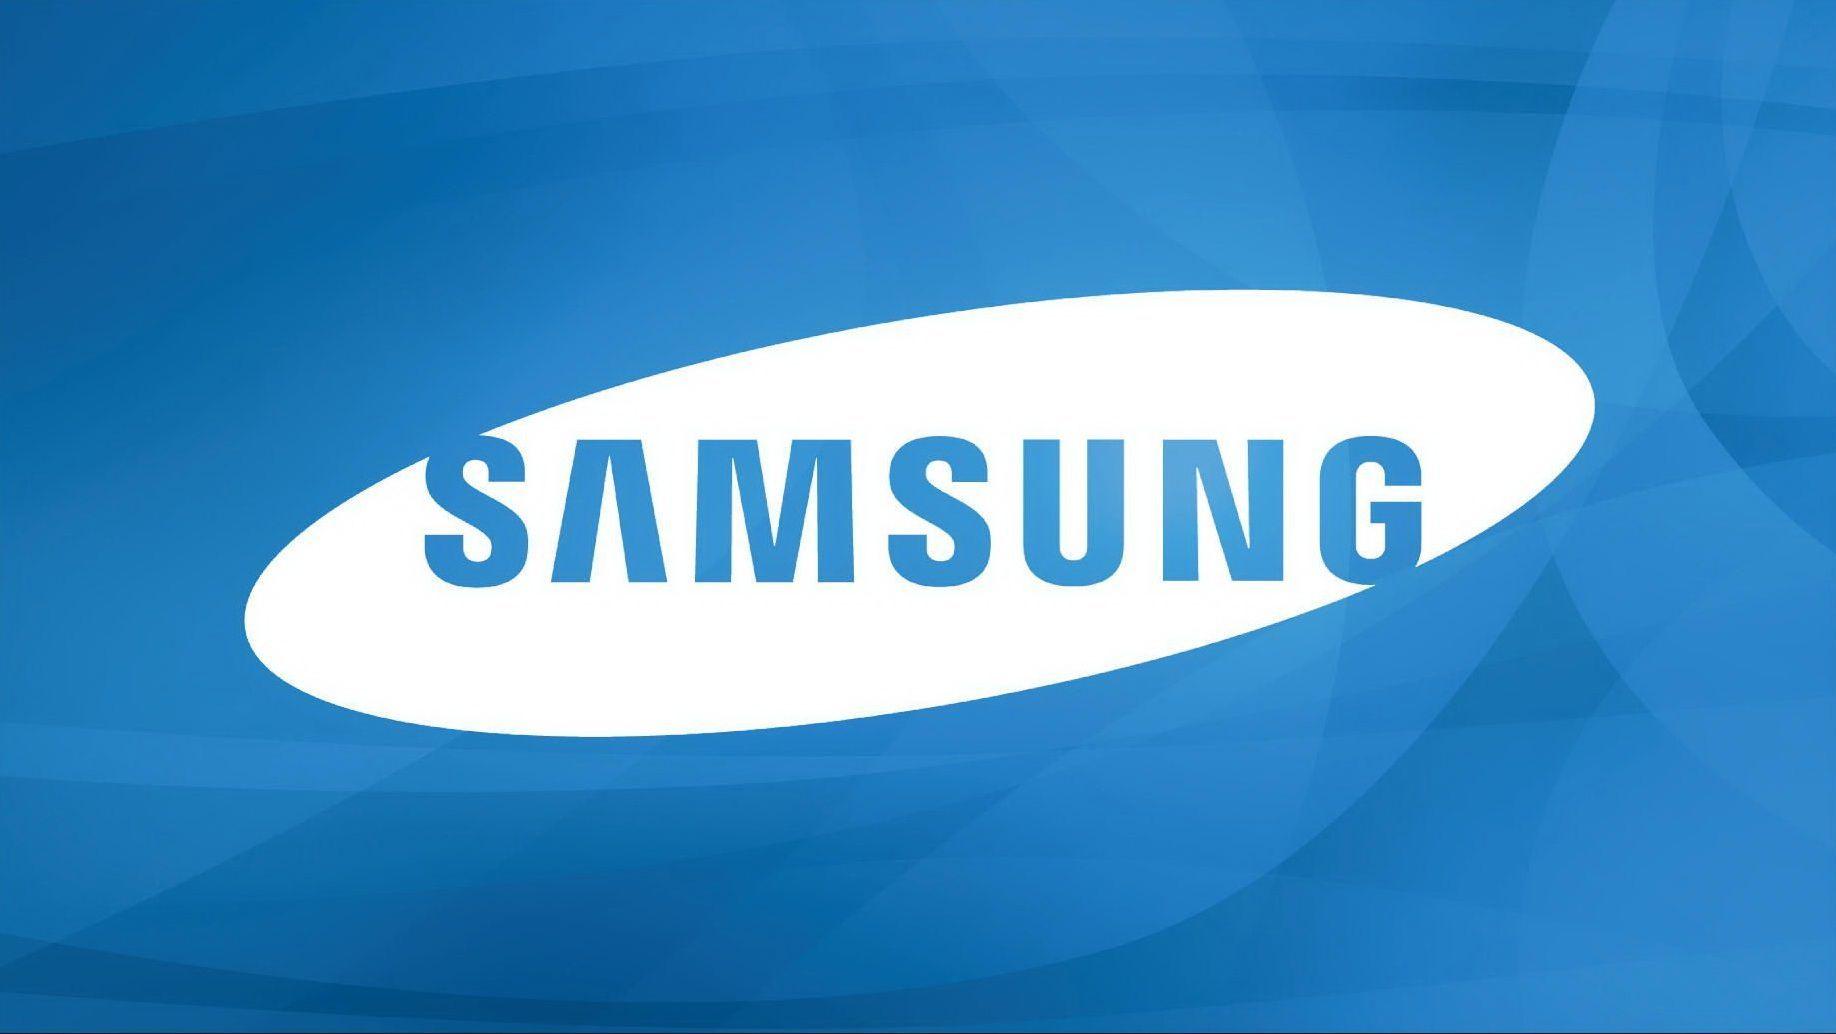 SamsungTelevisions Logo - Samsung LED TV Logo Wallpapers - Wallpaper Cave